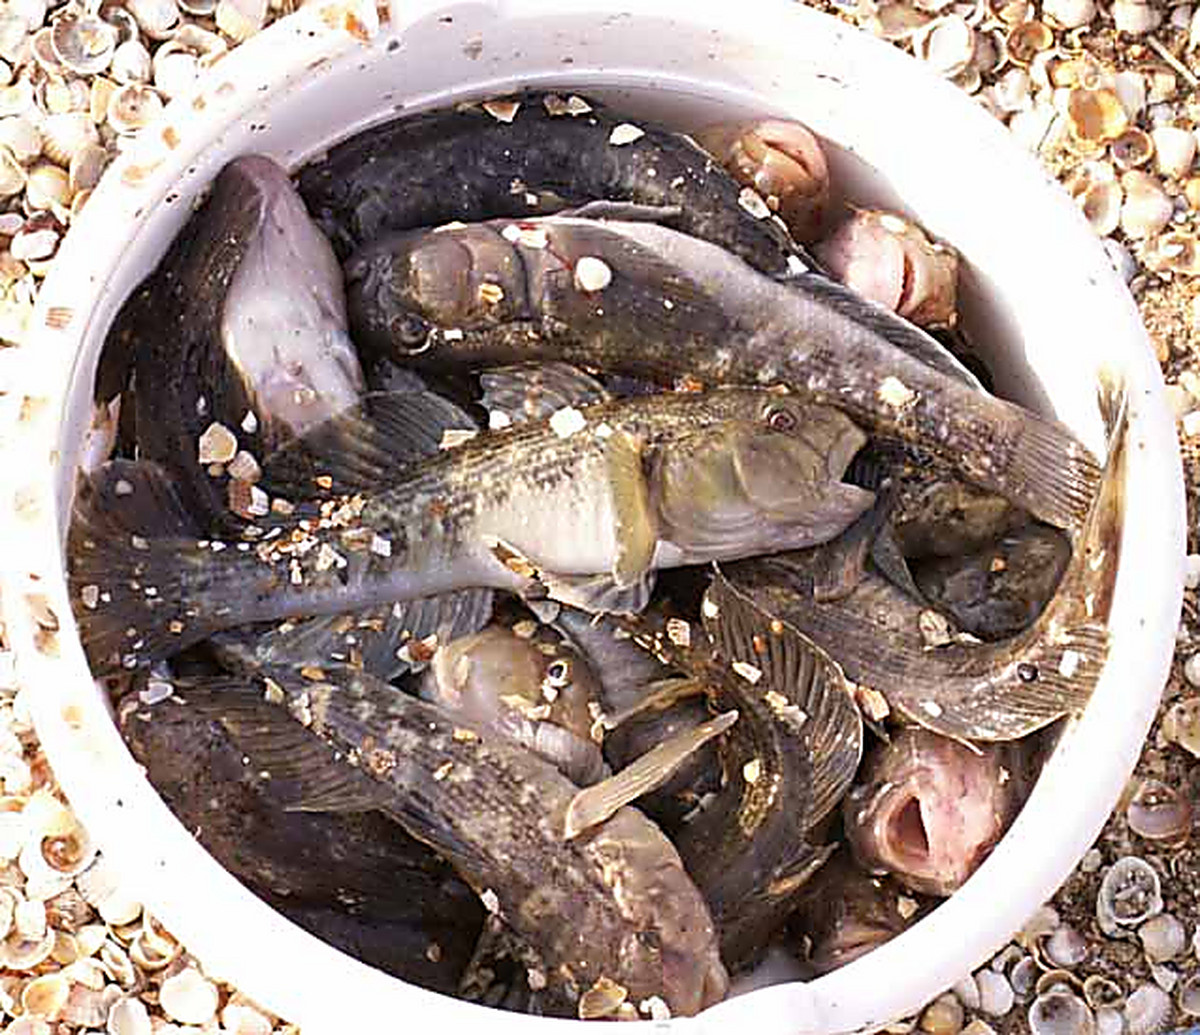 На азовском море рыбалка